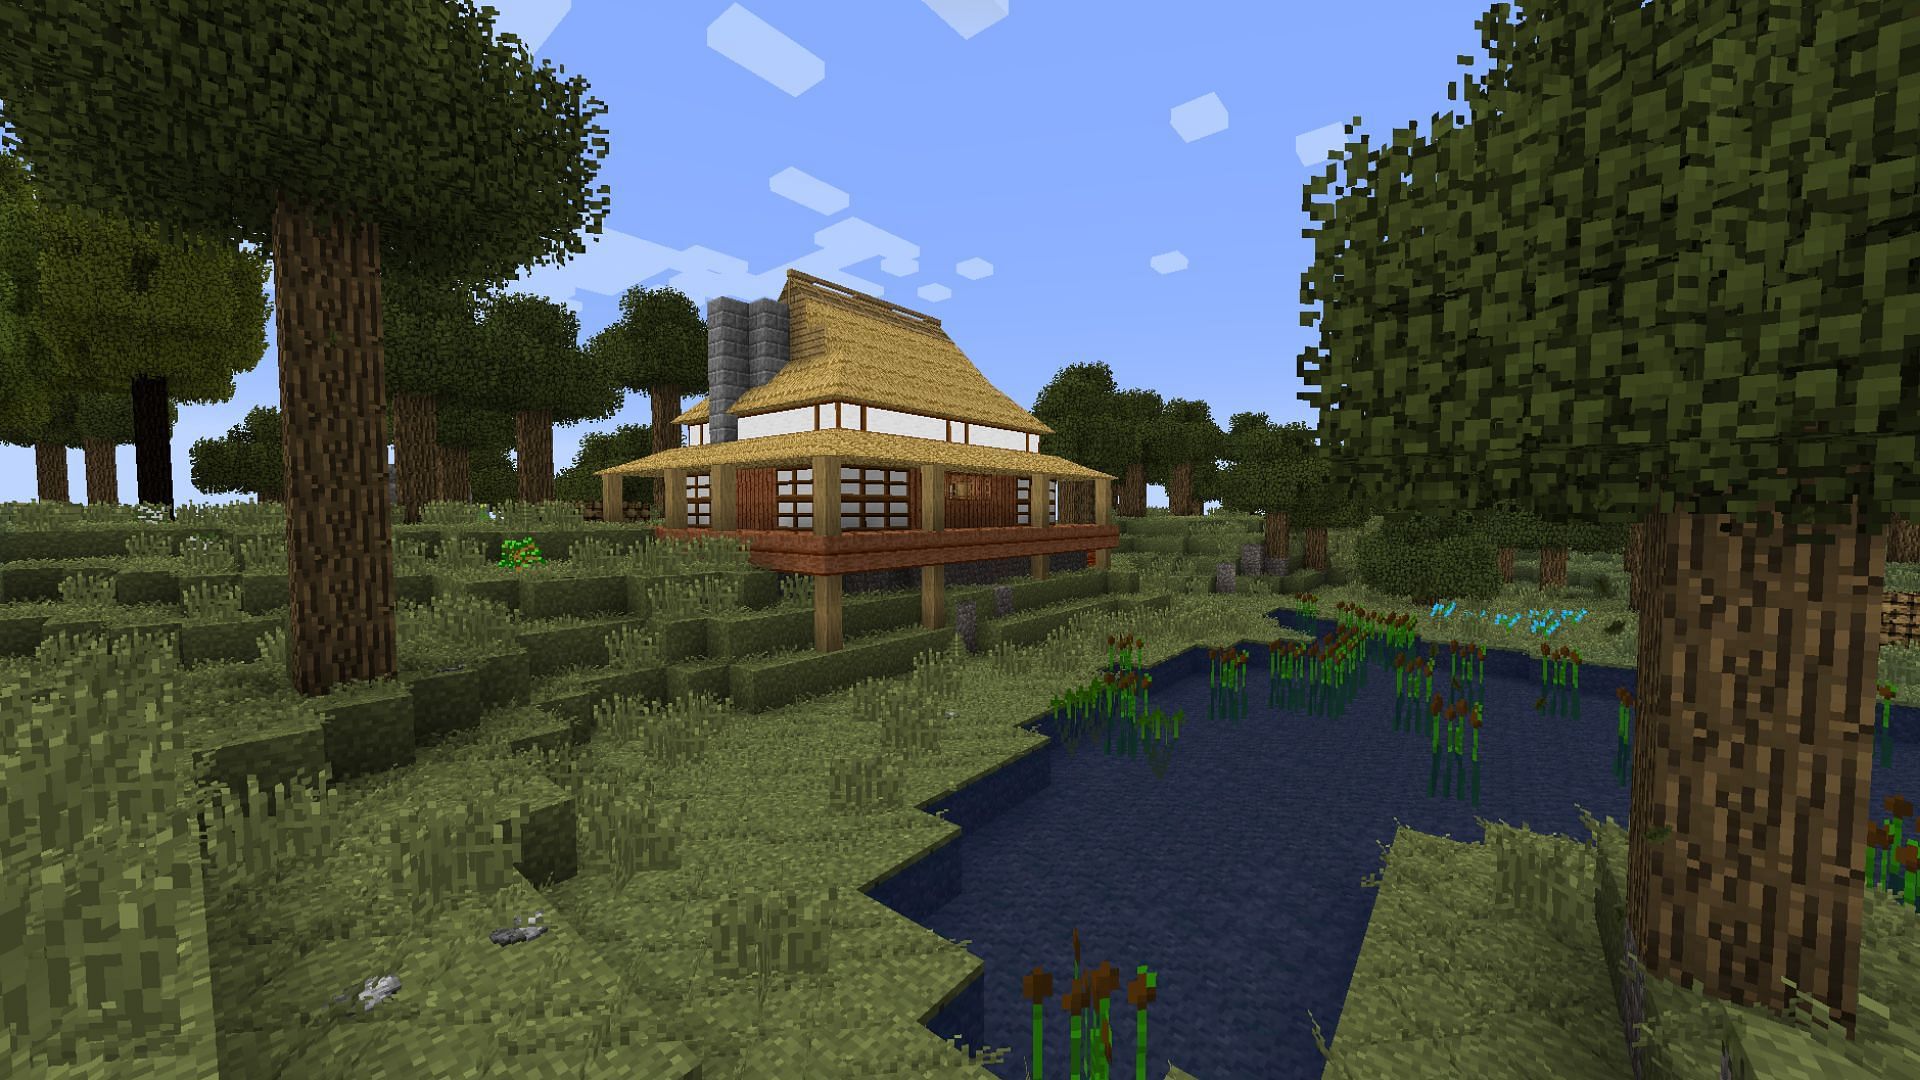 Japenese-style house made in TerraFirmaCraft Minecraft modpack (Image via u/ScrumpfDabogy Reddit)